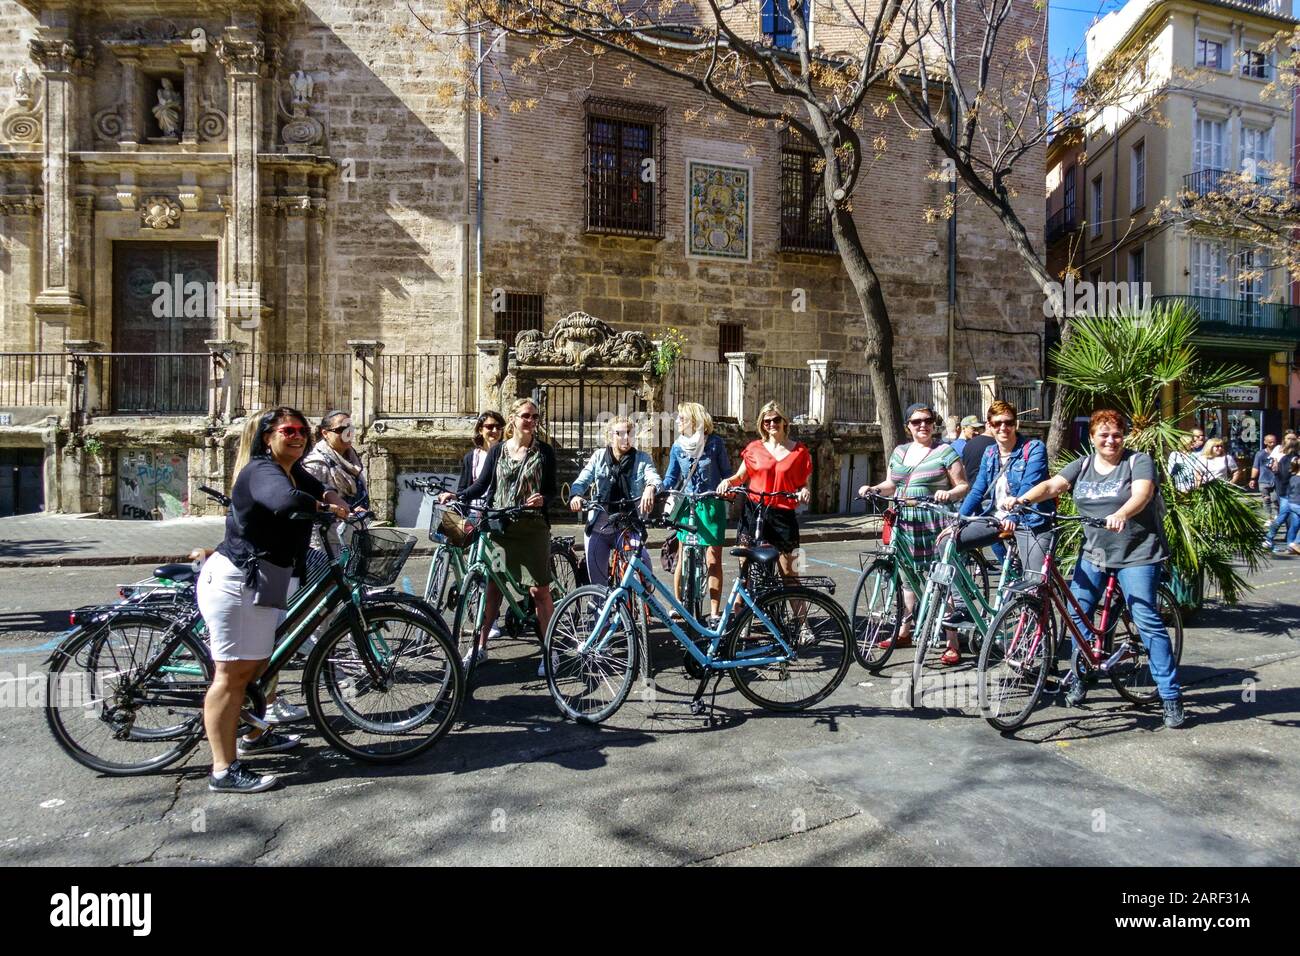 Group of people, women on bikes, Valencia on rental bike Spain cyclist bike cycling Europe street tourists sightseeing Stock Photo